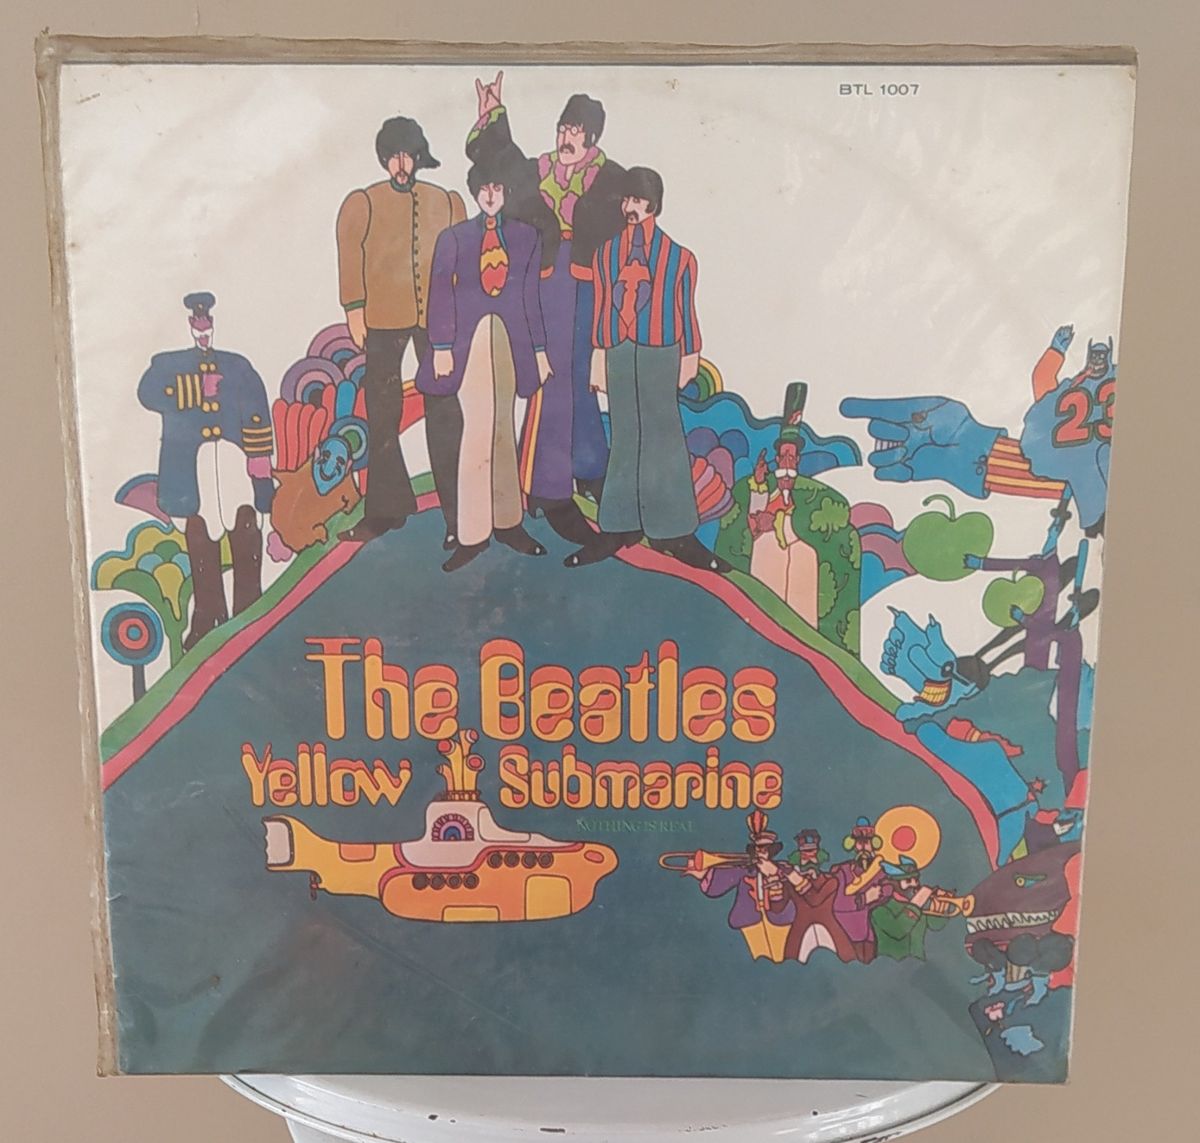 Lp The Beatles Yellow Submarine 1969 Item De Música Usado 74261291 Enjoei 3466